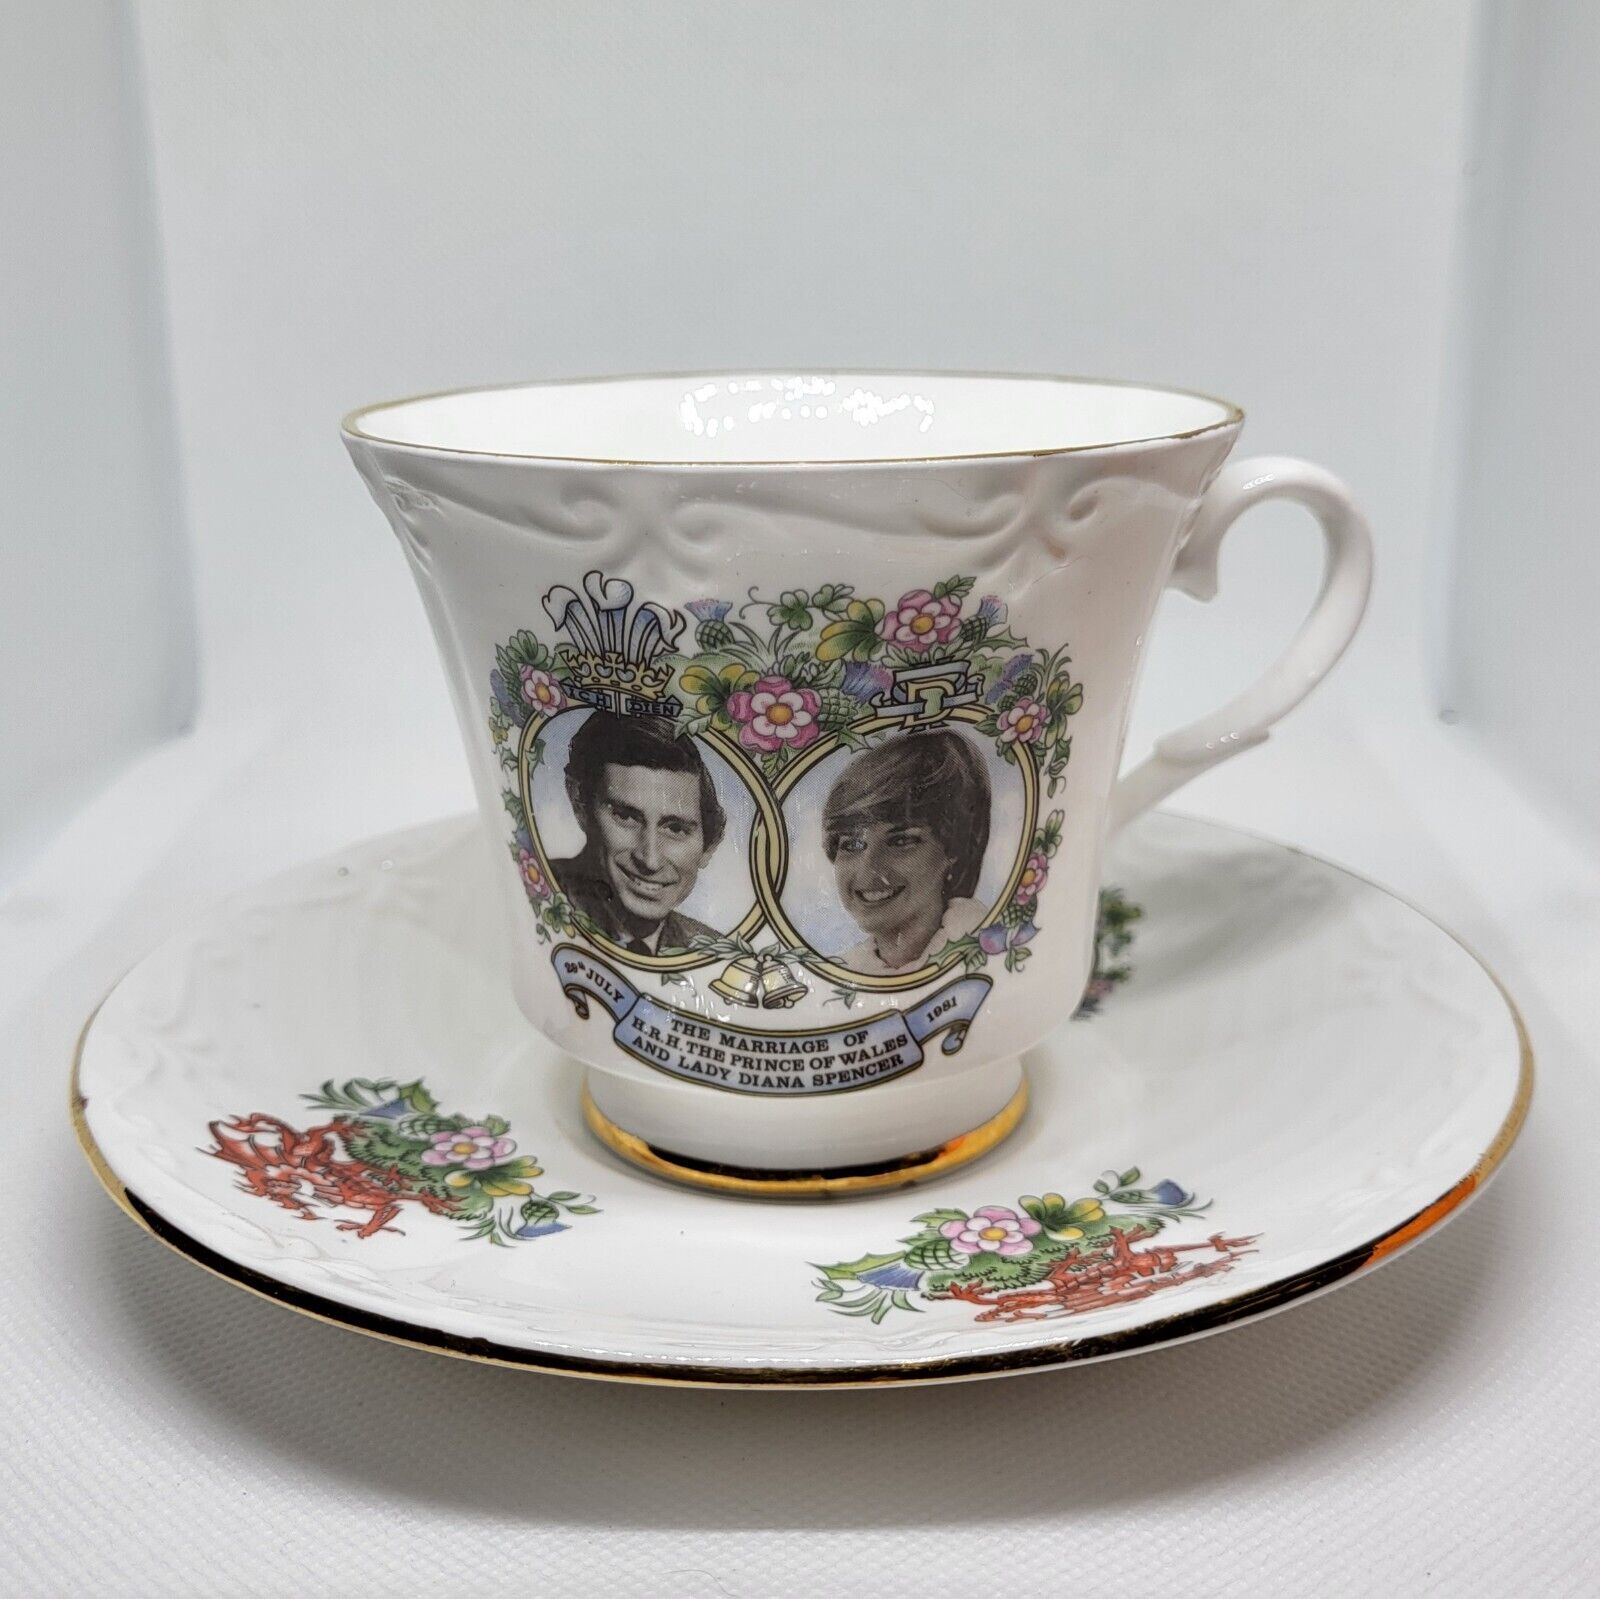 Prince Charles and Princess Diana 1981 Wedding Fine Bone China Tea Cup Saucer